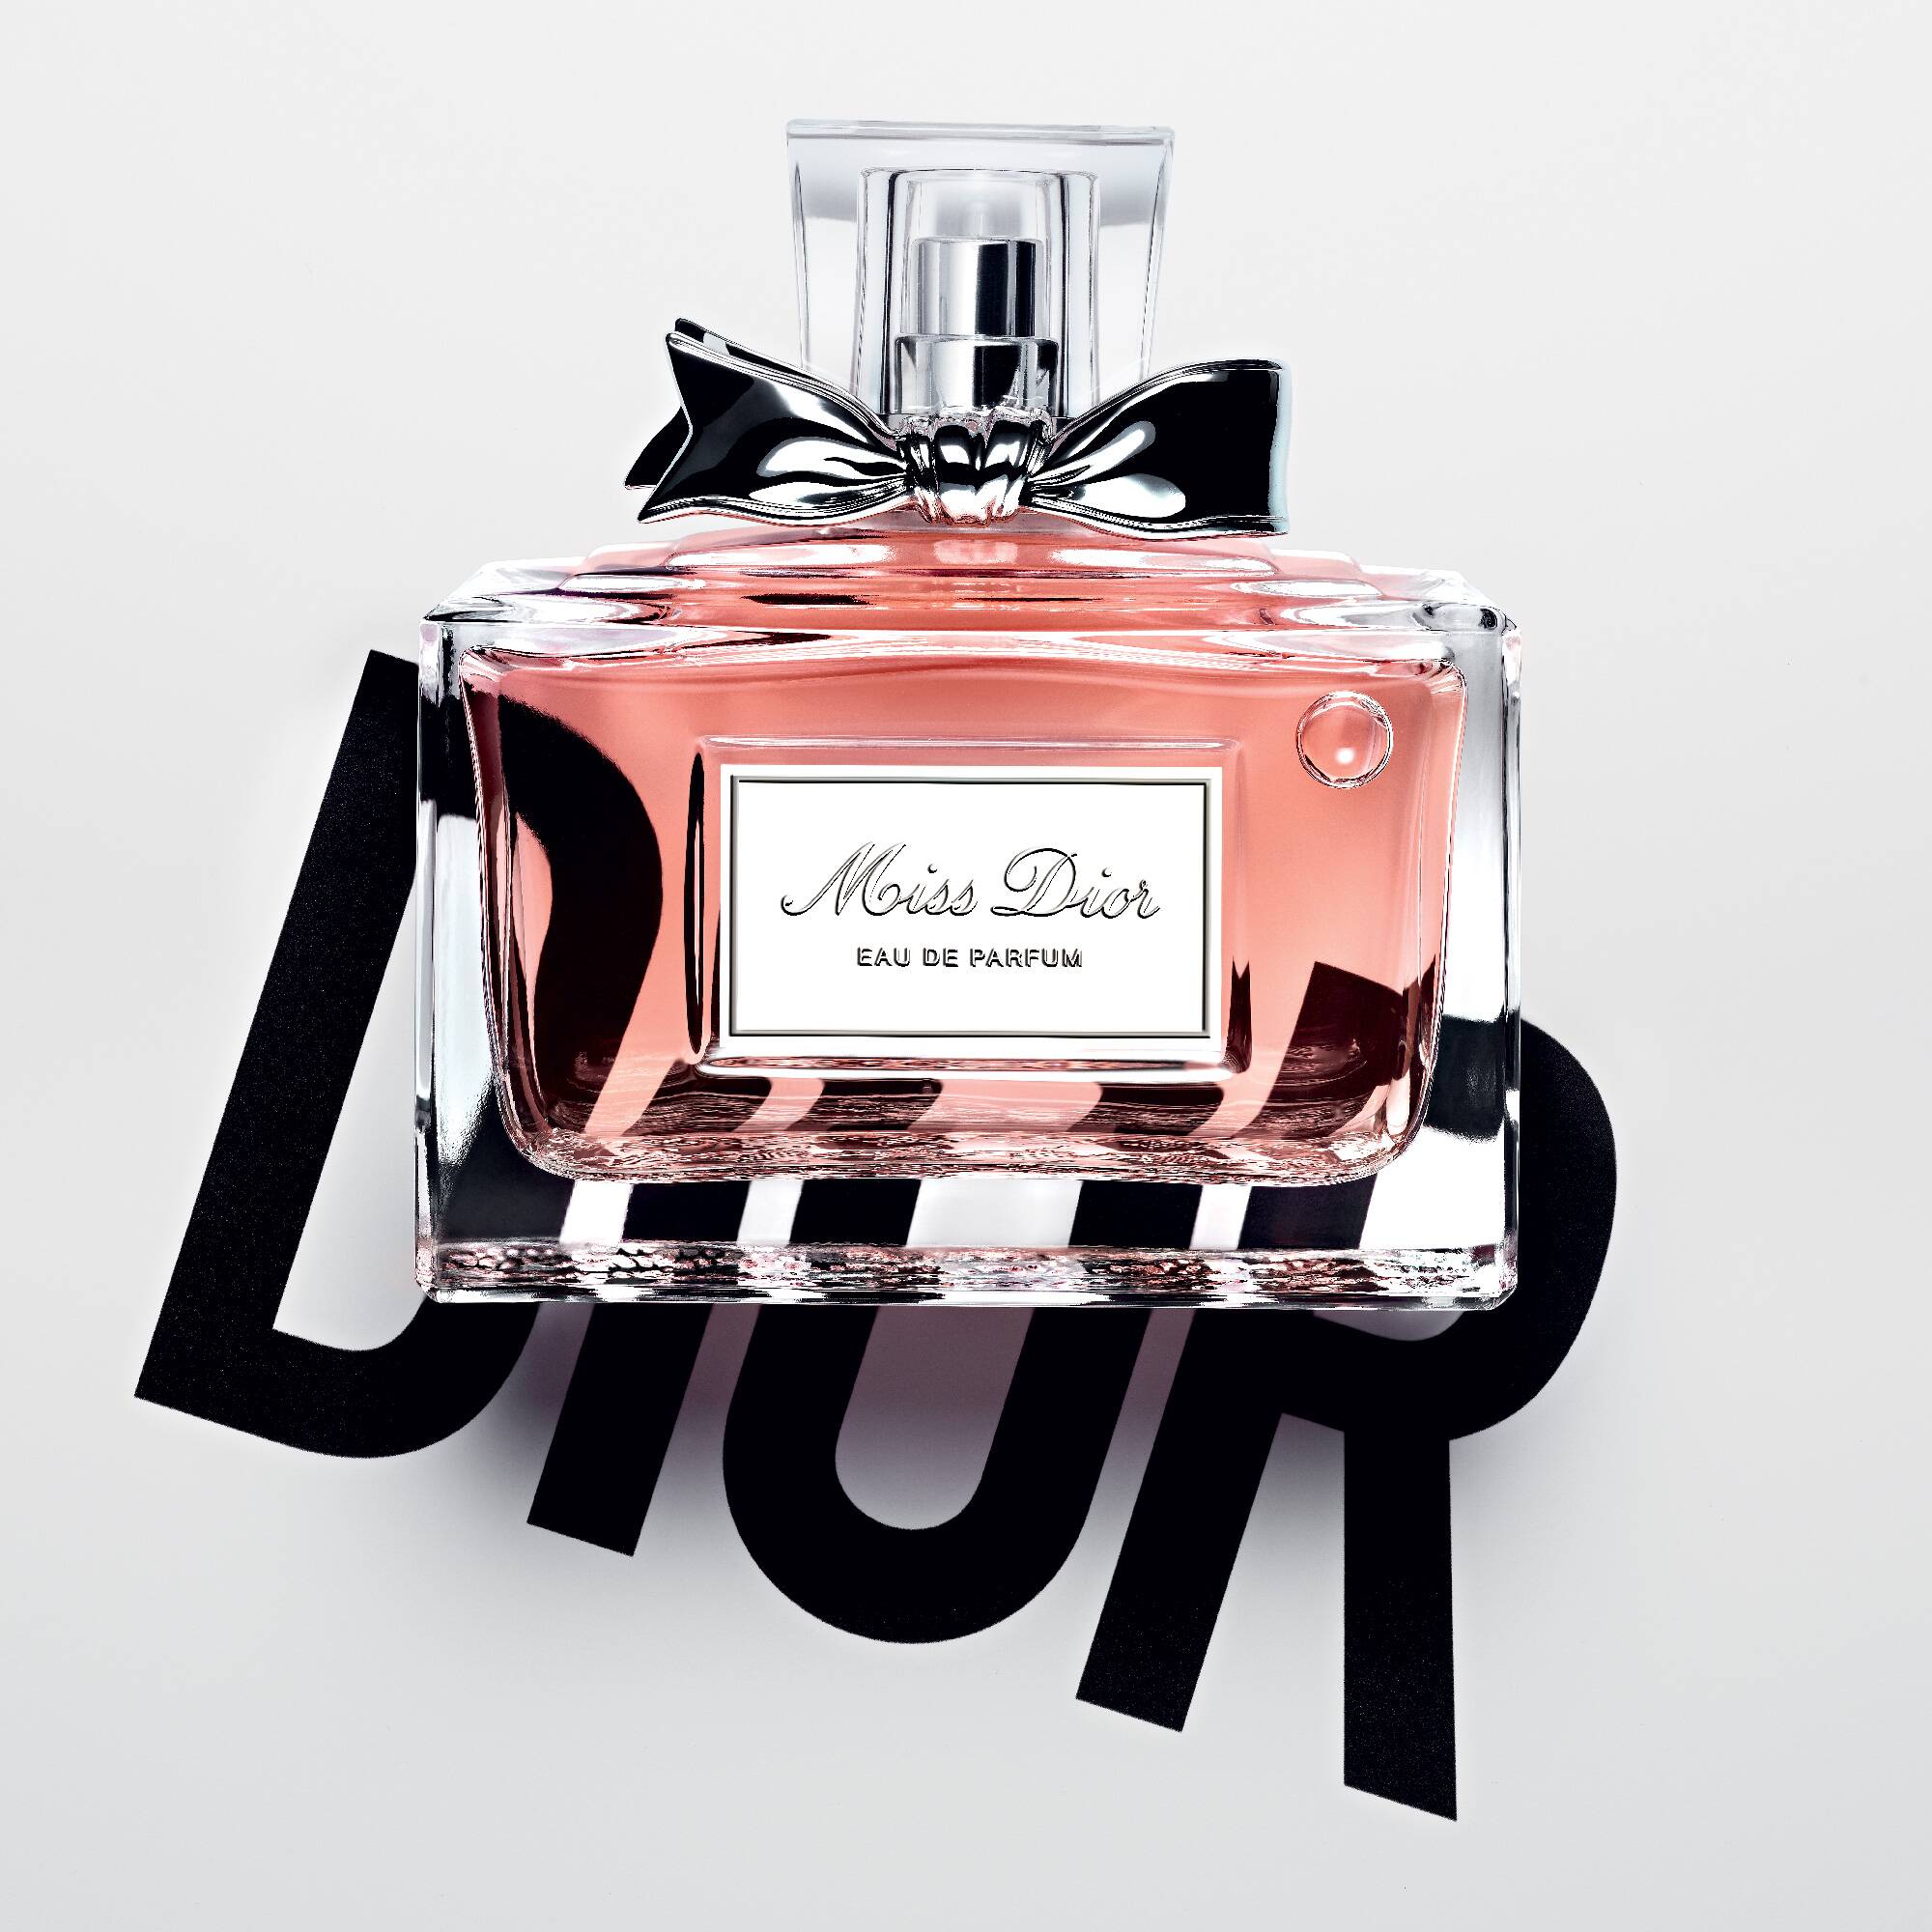 Parfums Christian Dior has released a captivating film for its new fragrance, Miss Dior Eau de Parfum